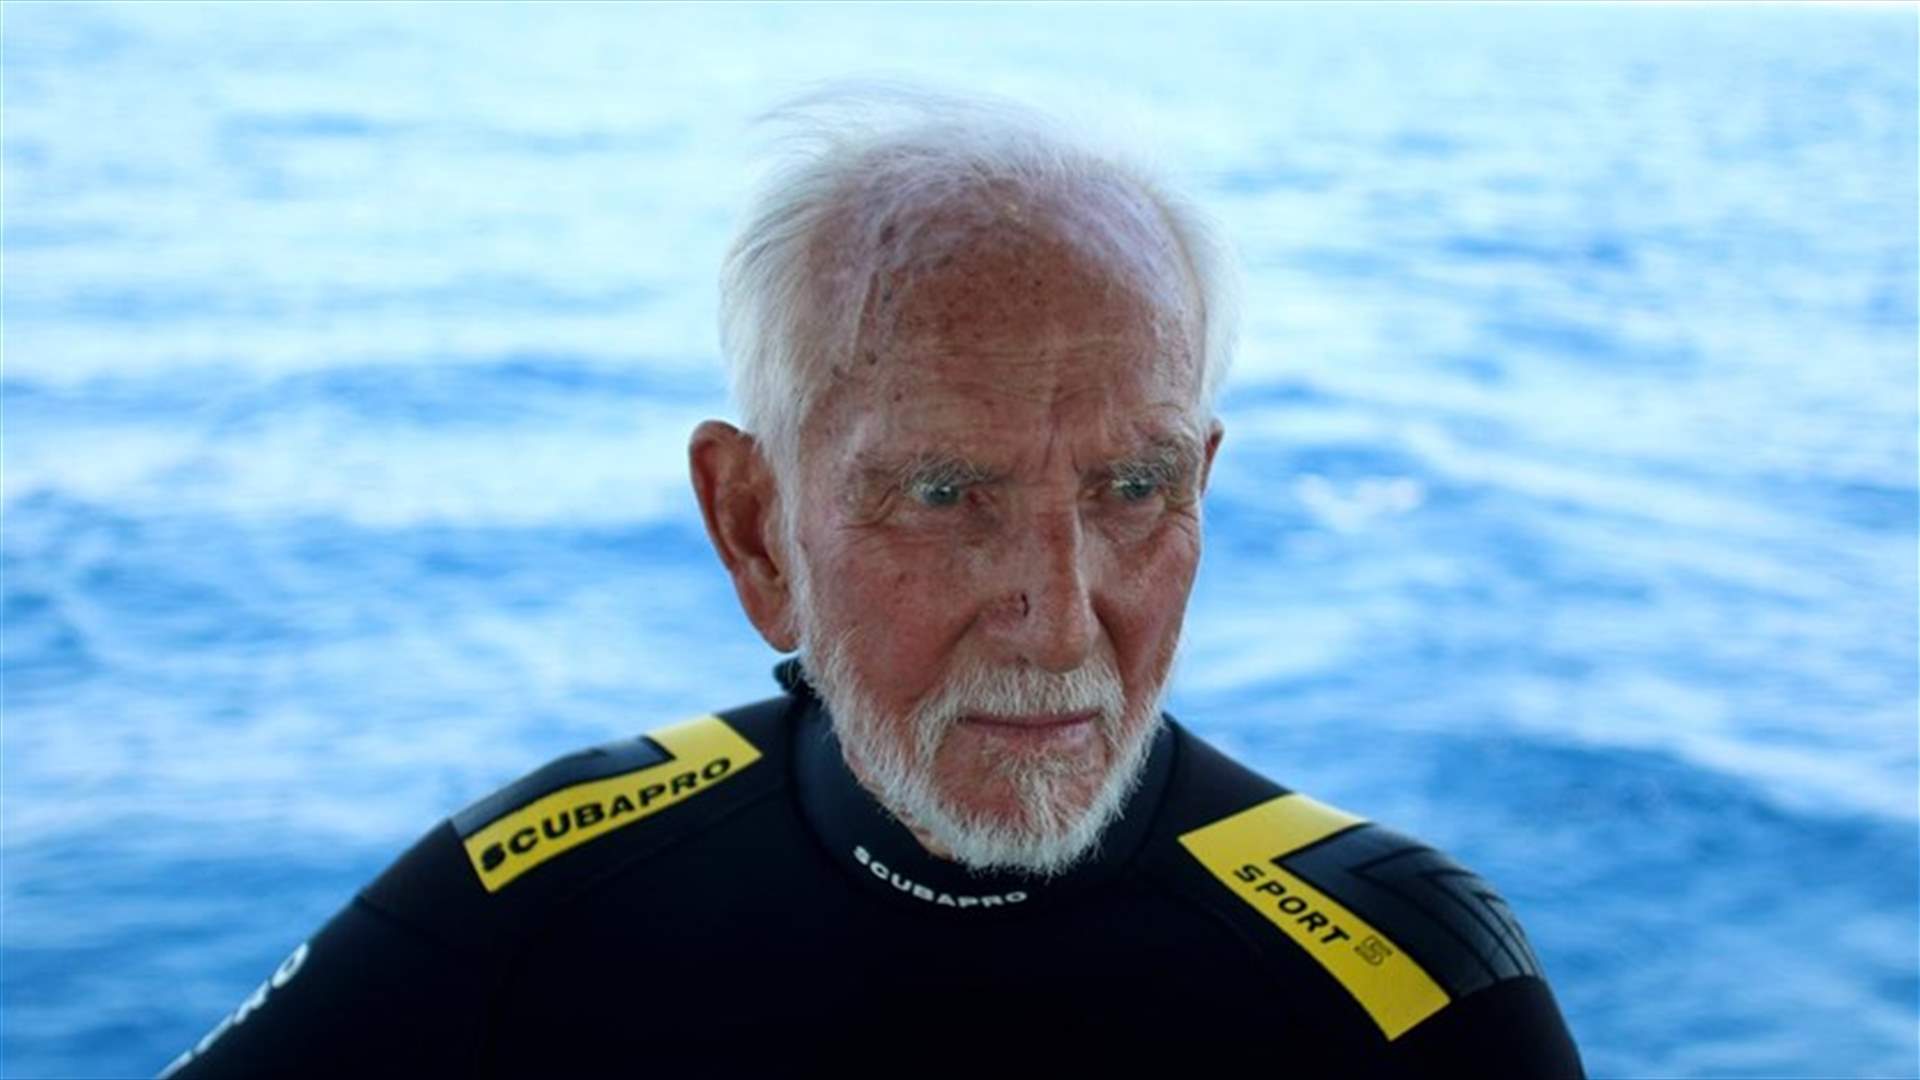 World War Two Veteran Breaks Own Scuba Diving Record At 96